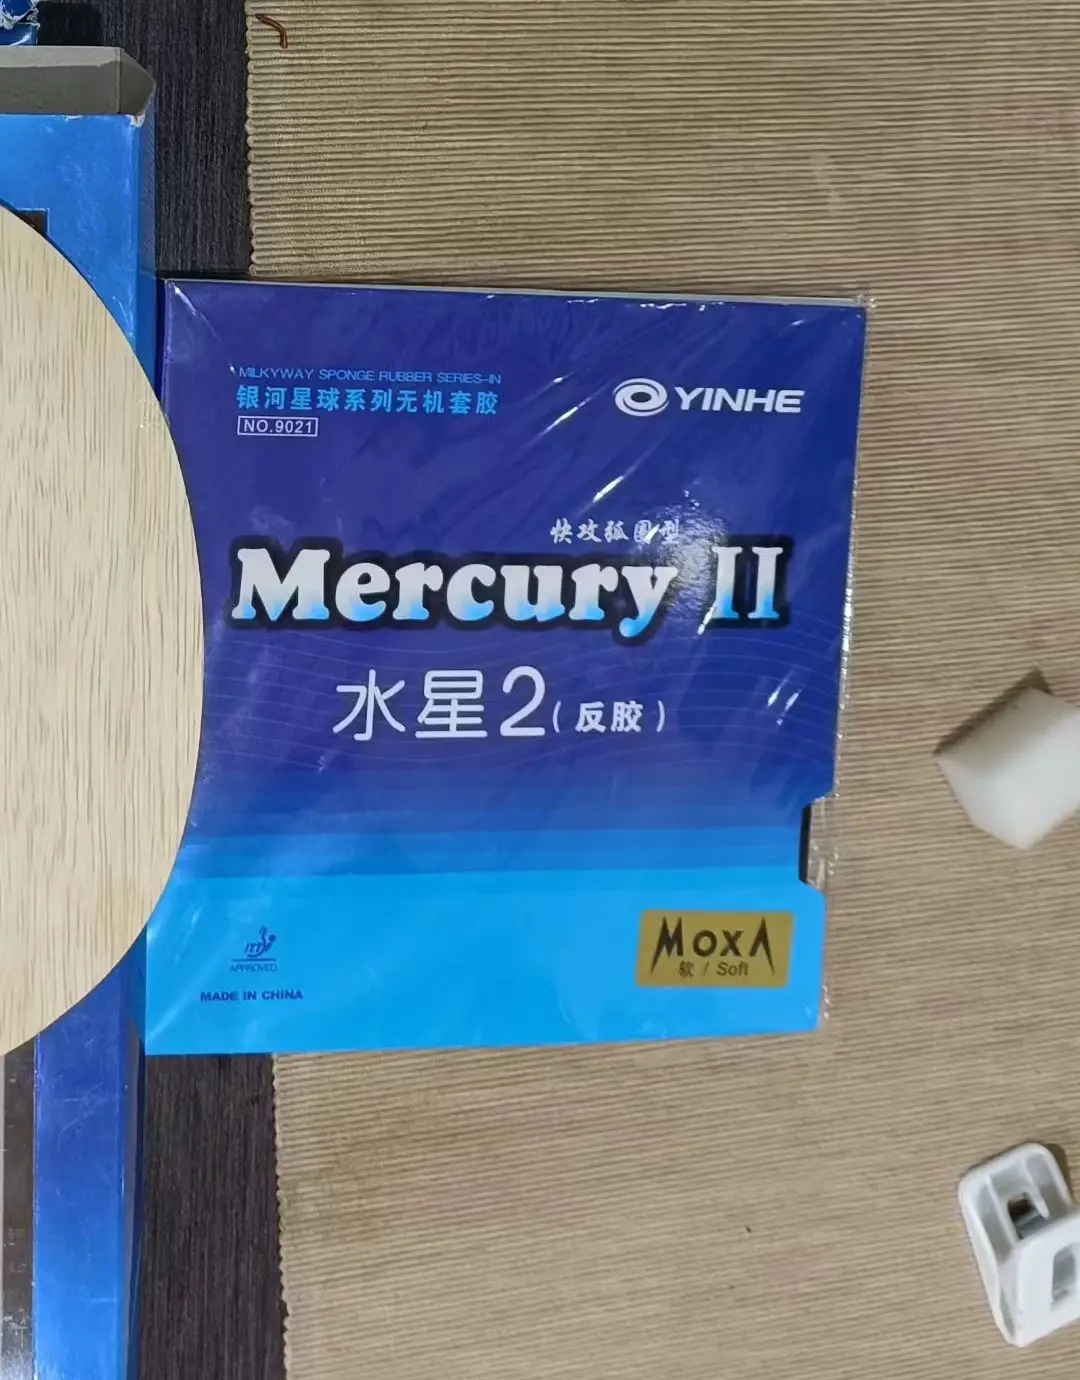 Yinhe Mercury 2 Review